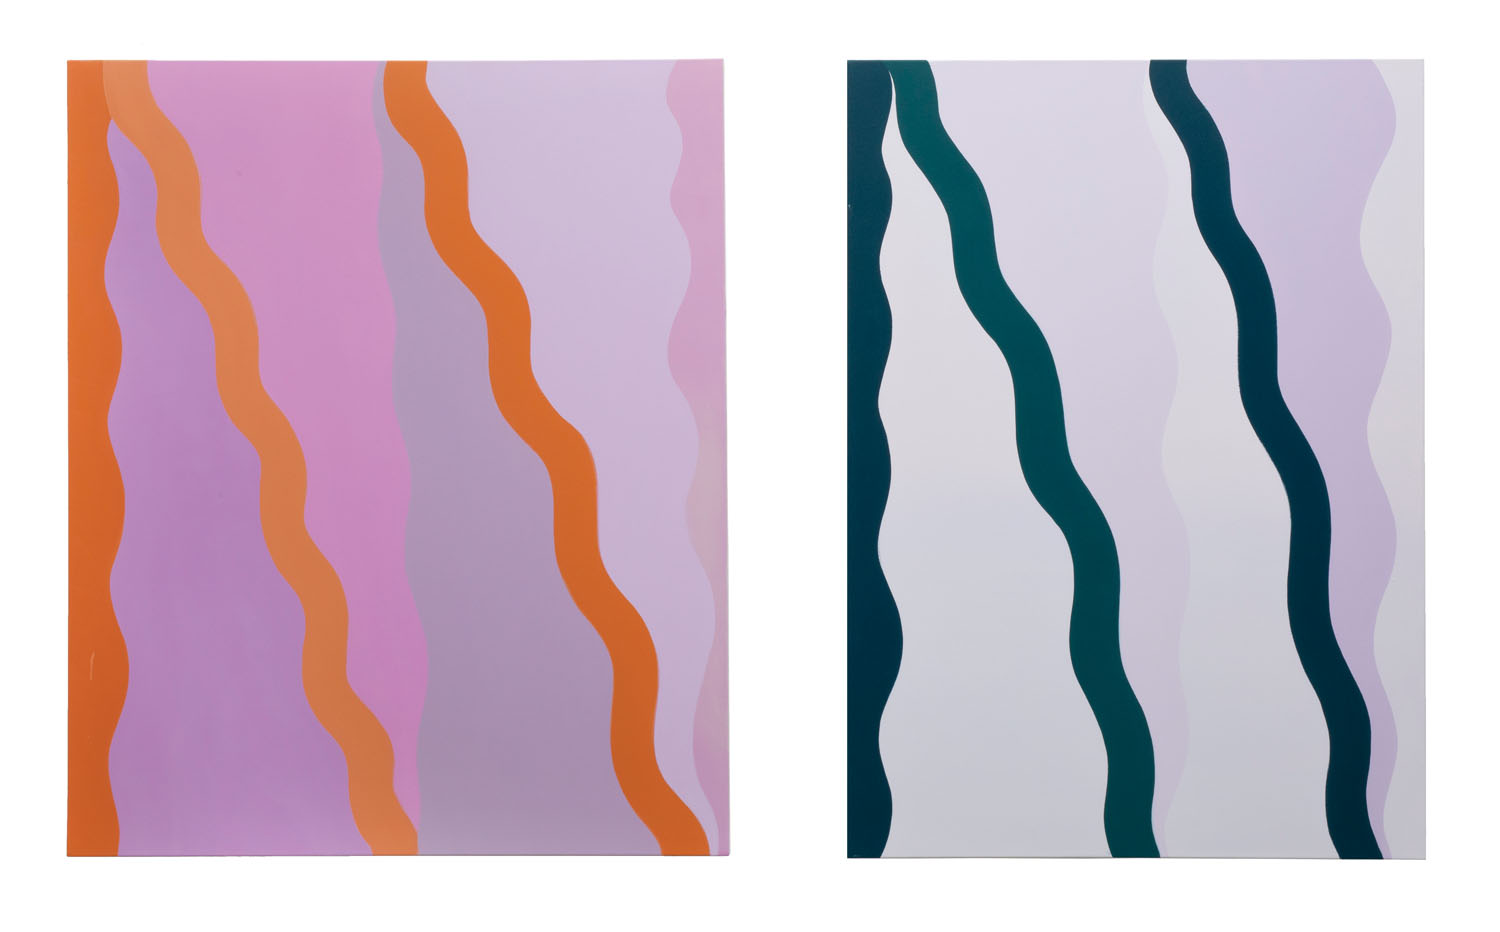 doble diferente, 2019. Oil on canvas, 58” x 48”, 58” x 42”.